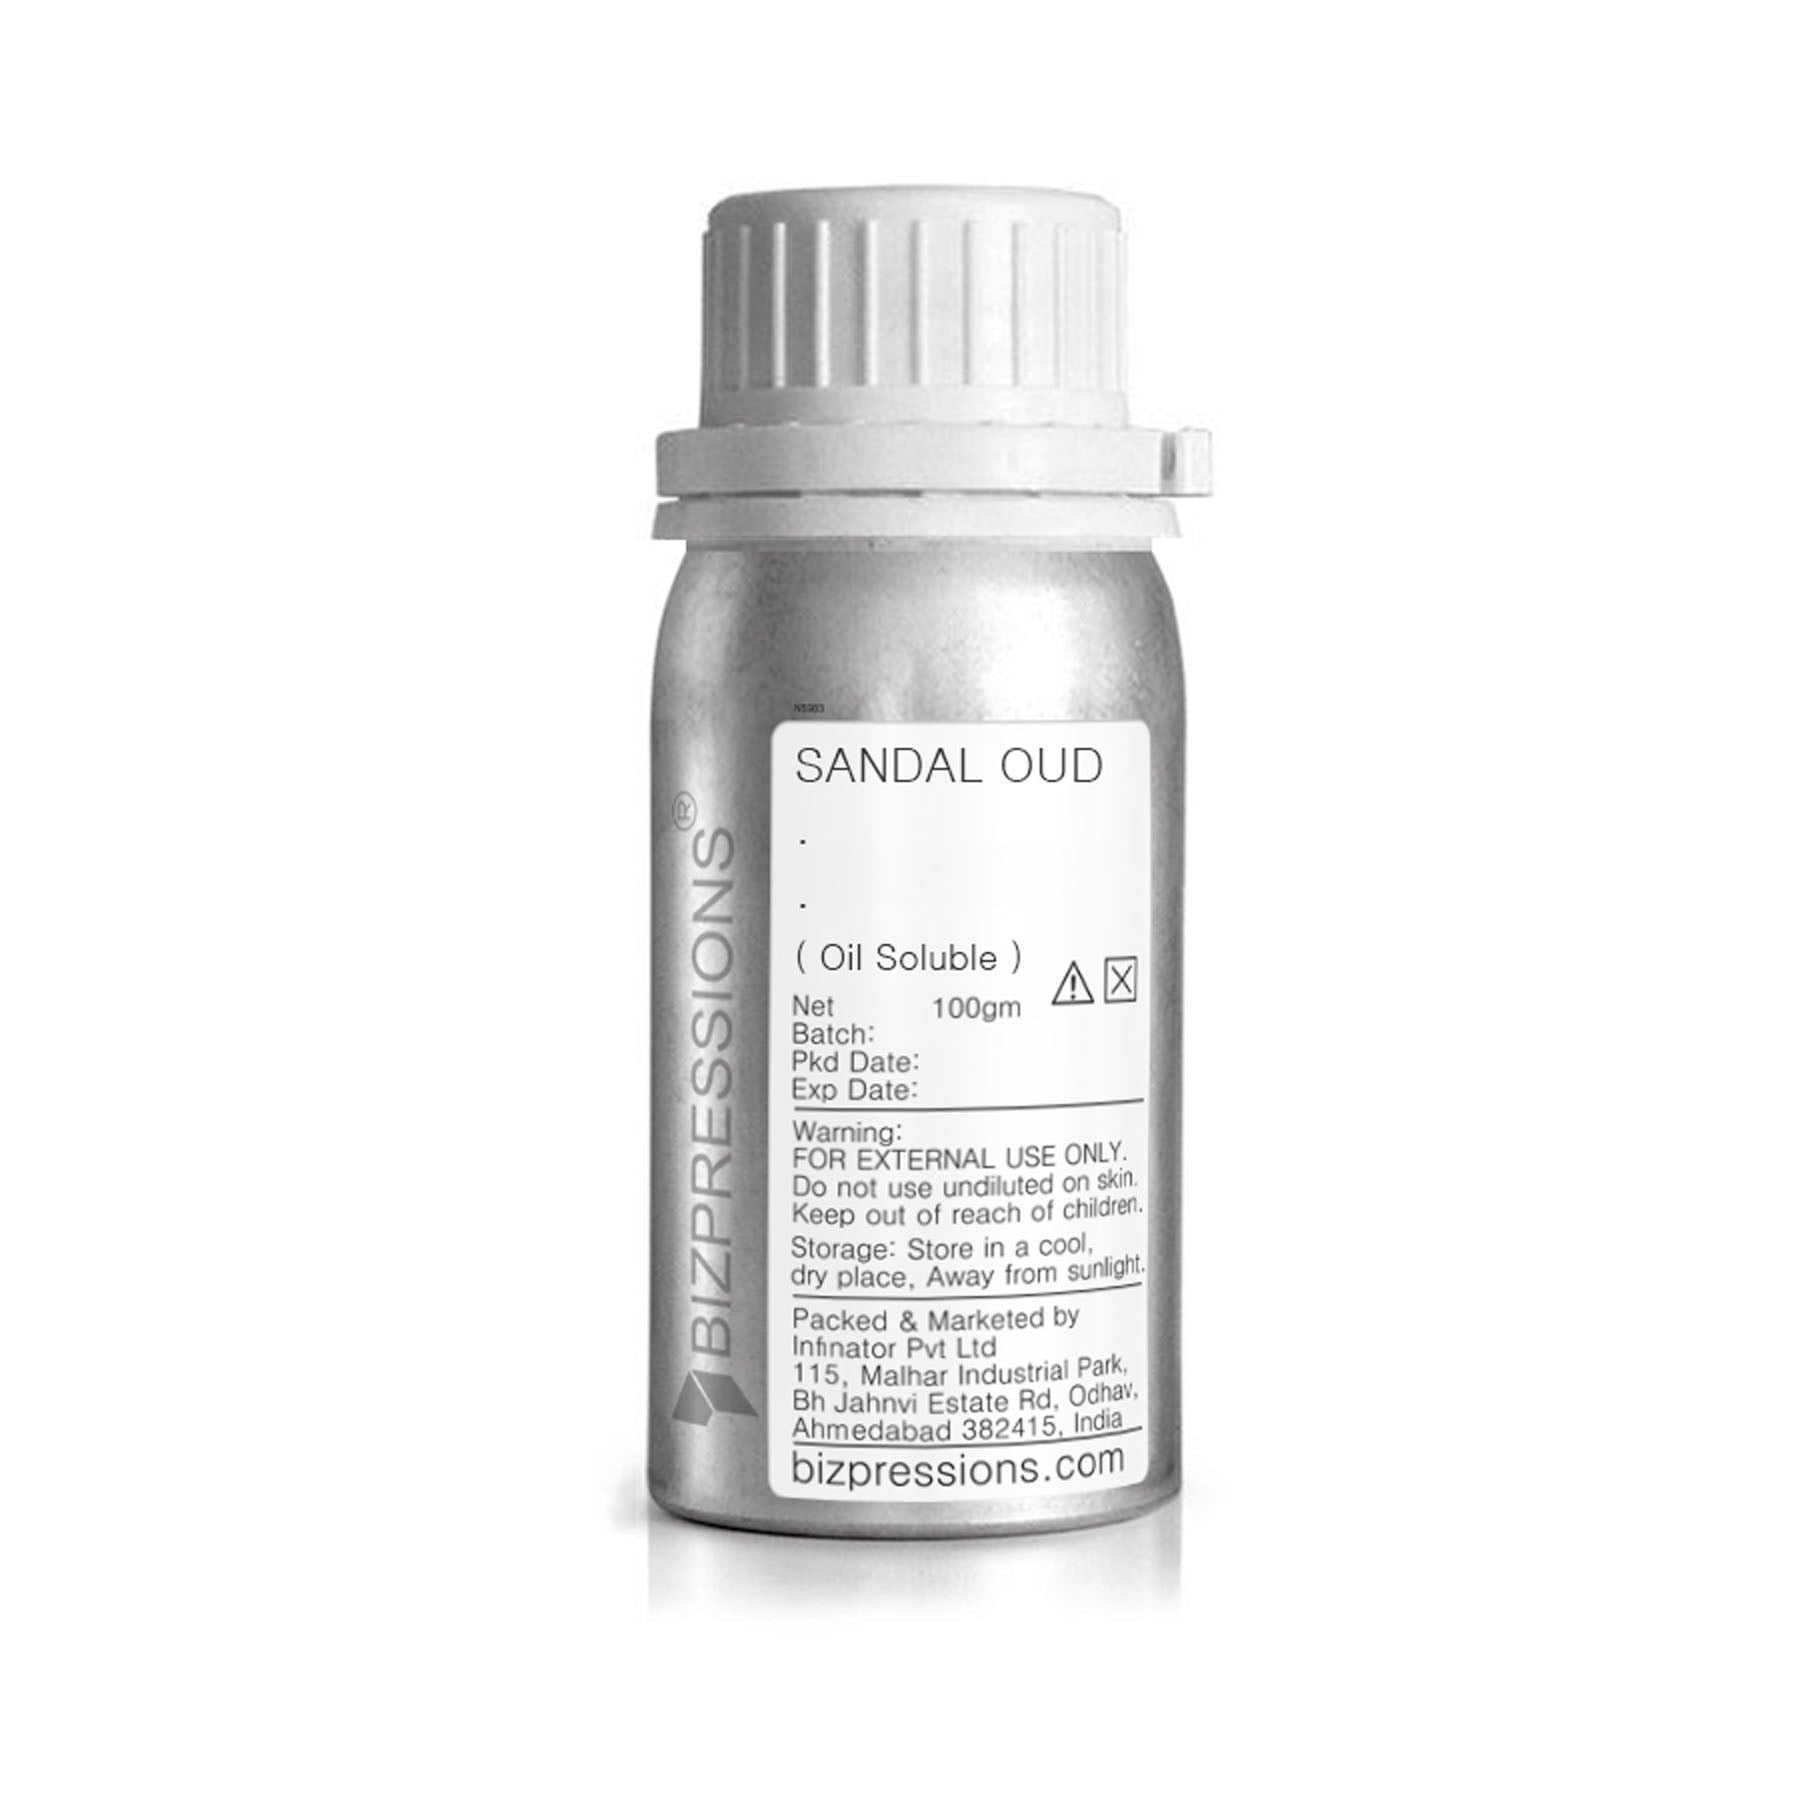 SANDAL OUD - Fragrance ( Oil Soluble ) - 100 gm